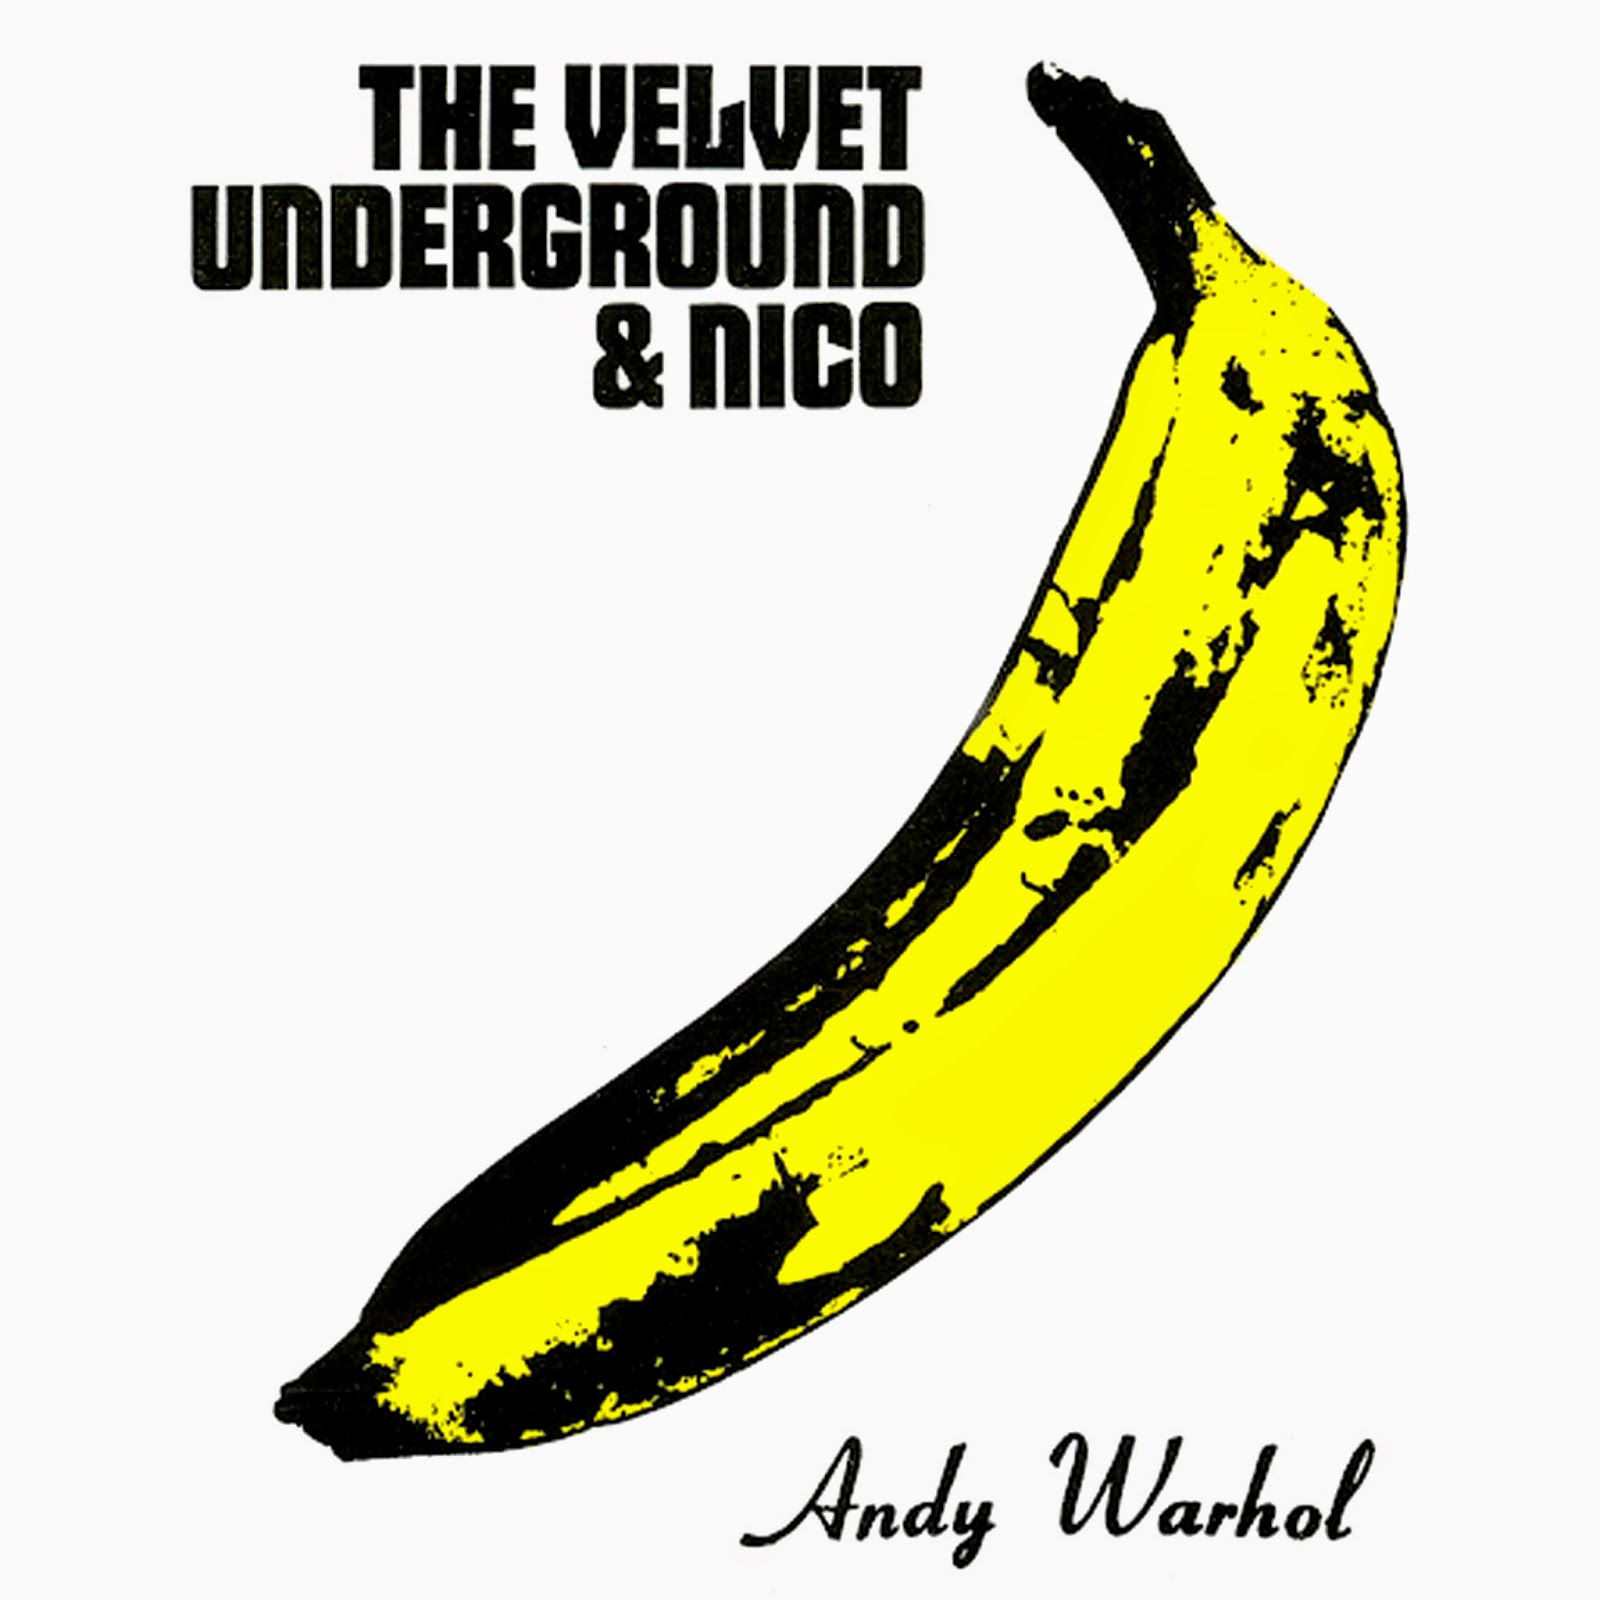 The Sound - Página 10 The-Velvet-Underground-Nico